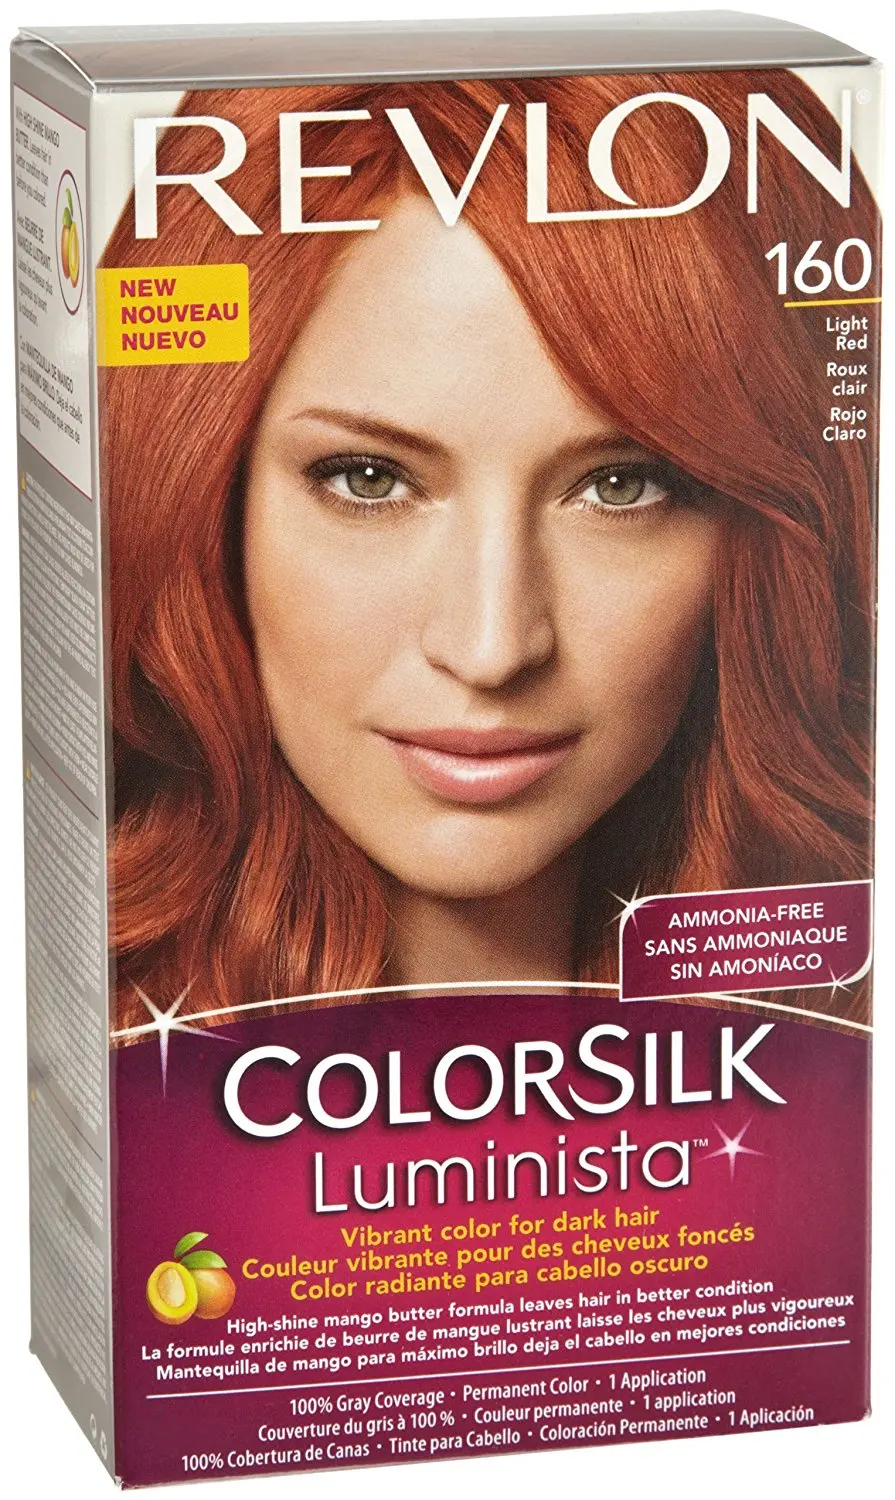 Buy Revlon Colorsilk Luminista Haircolor In Cheap Price On Alibaba Com